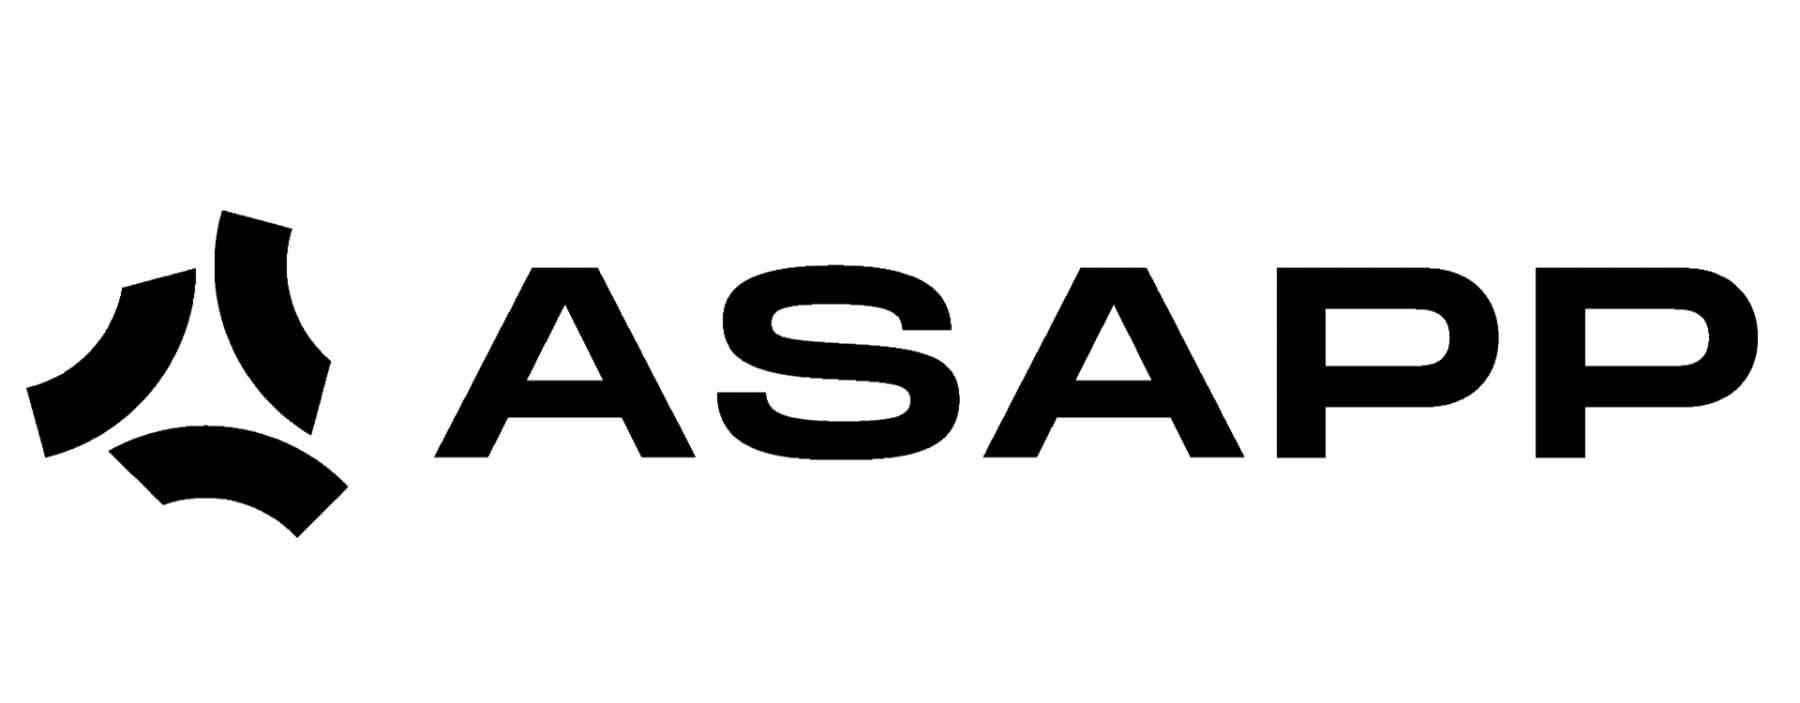 ASAPP logo